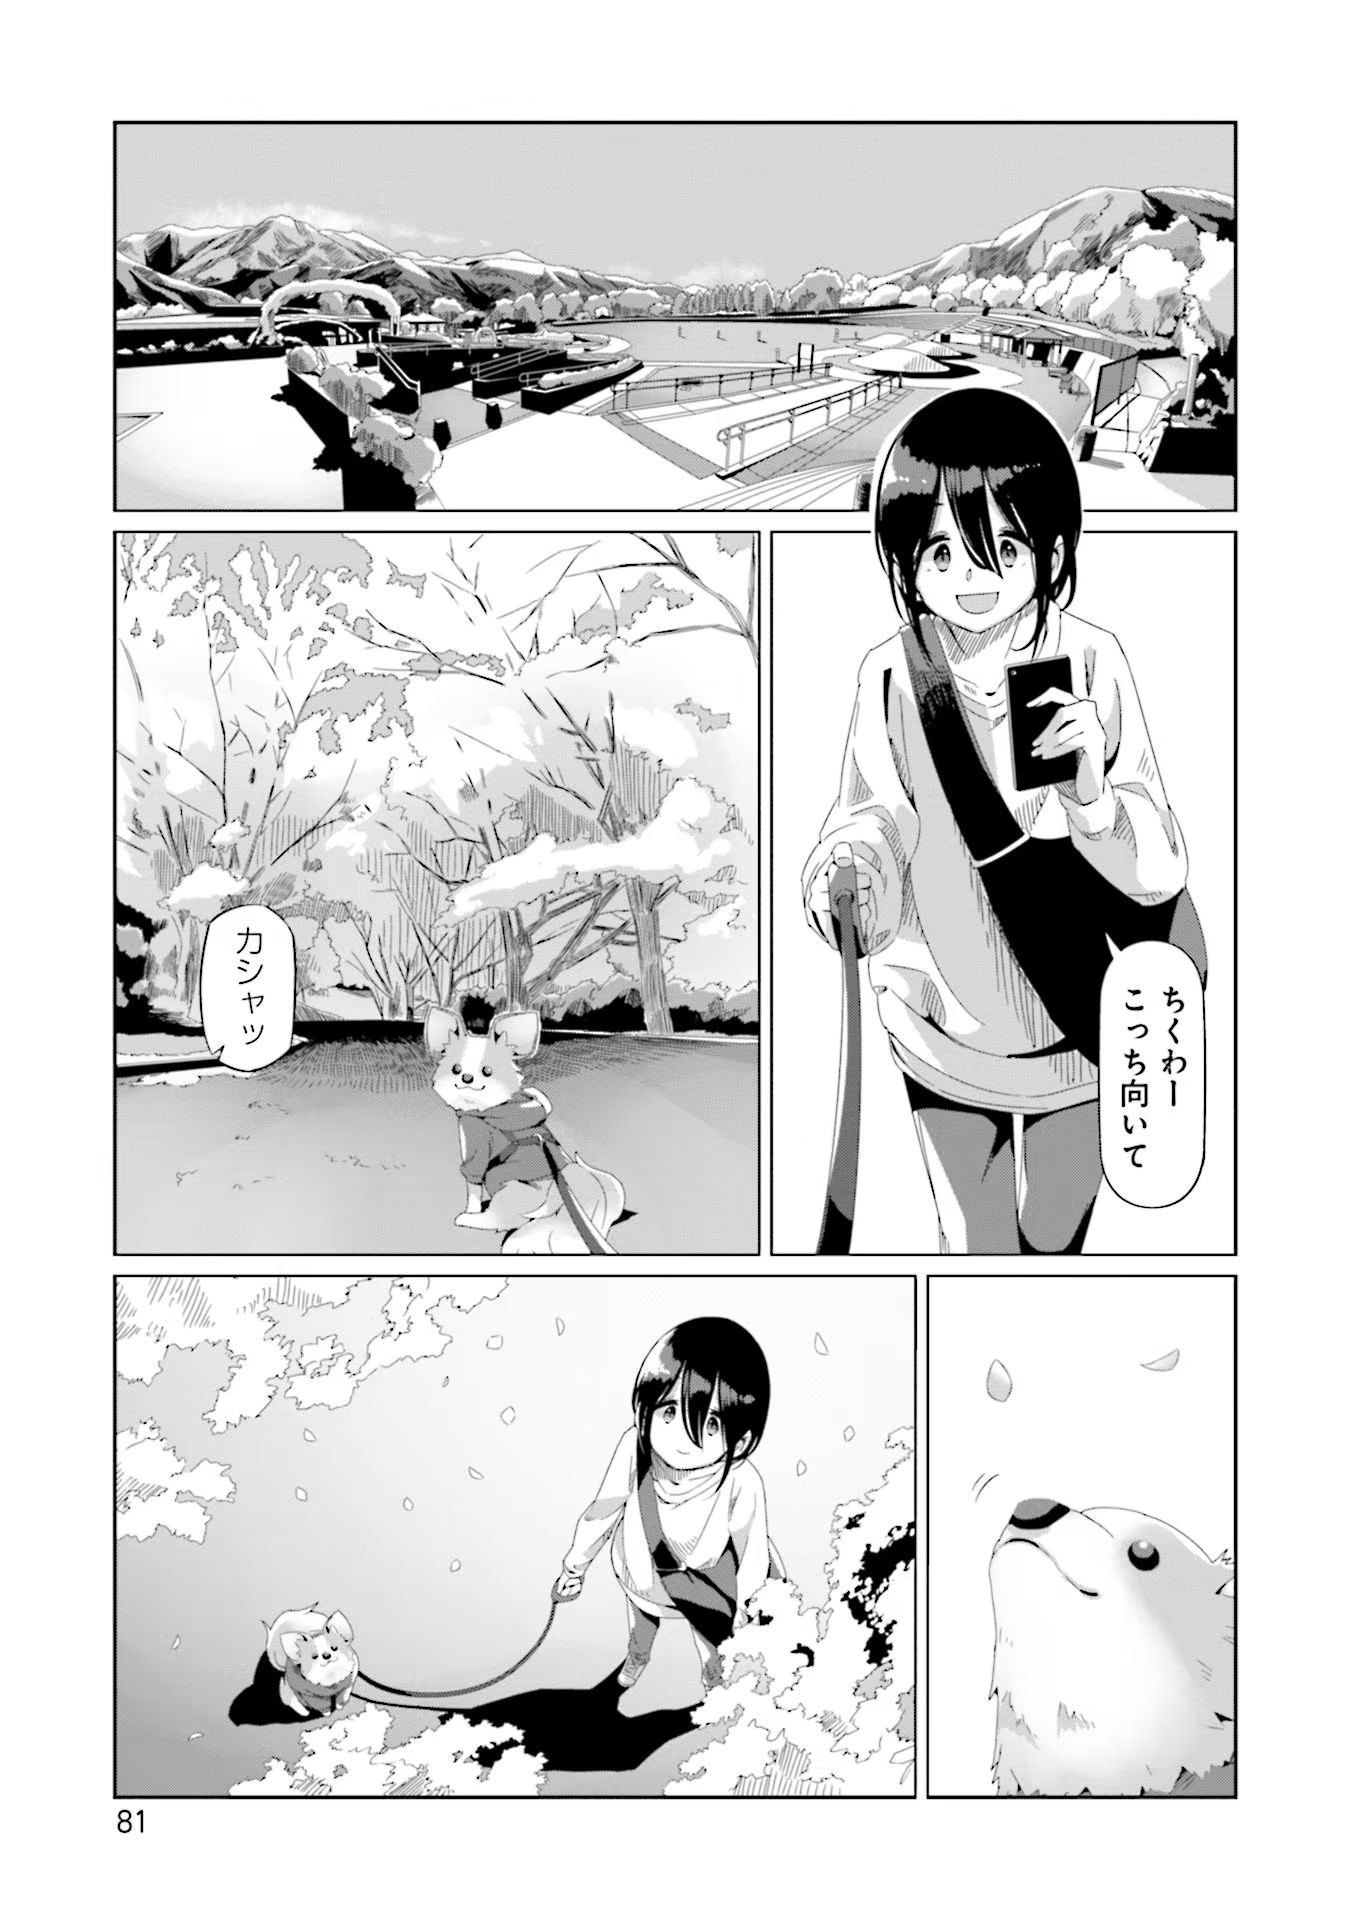 Yuru Camp - Chapter 73 - Page 1